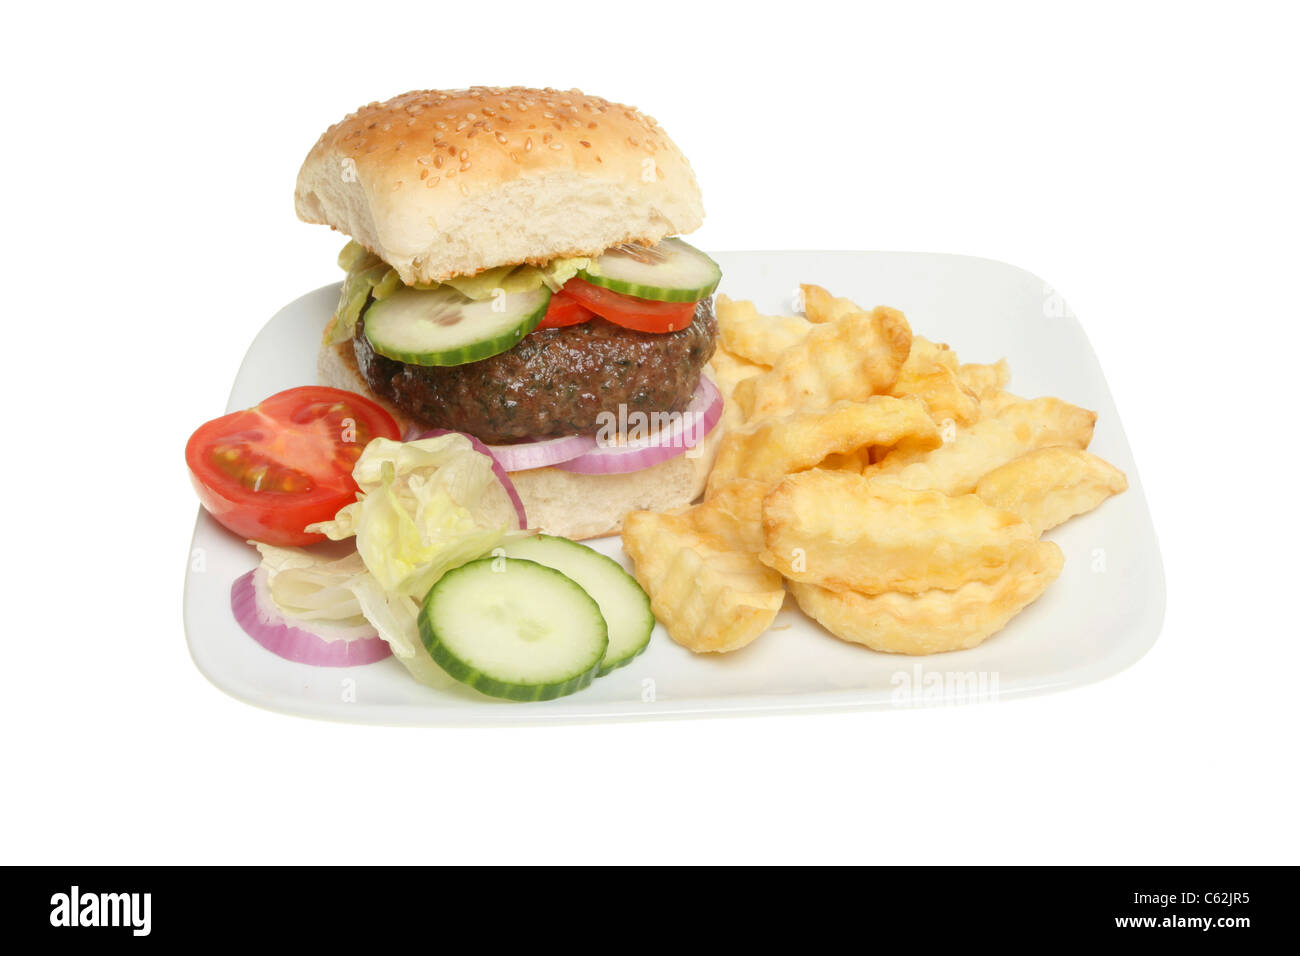 Hamburger salad and crinkle cut potato chips Stock Photo